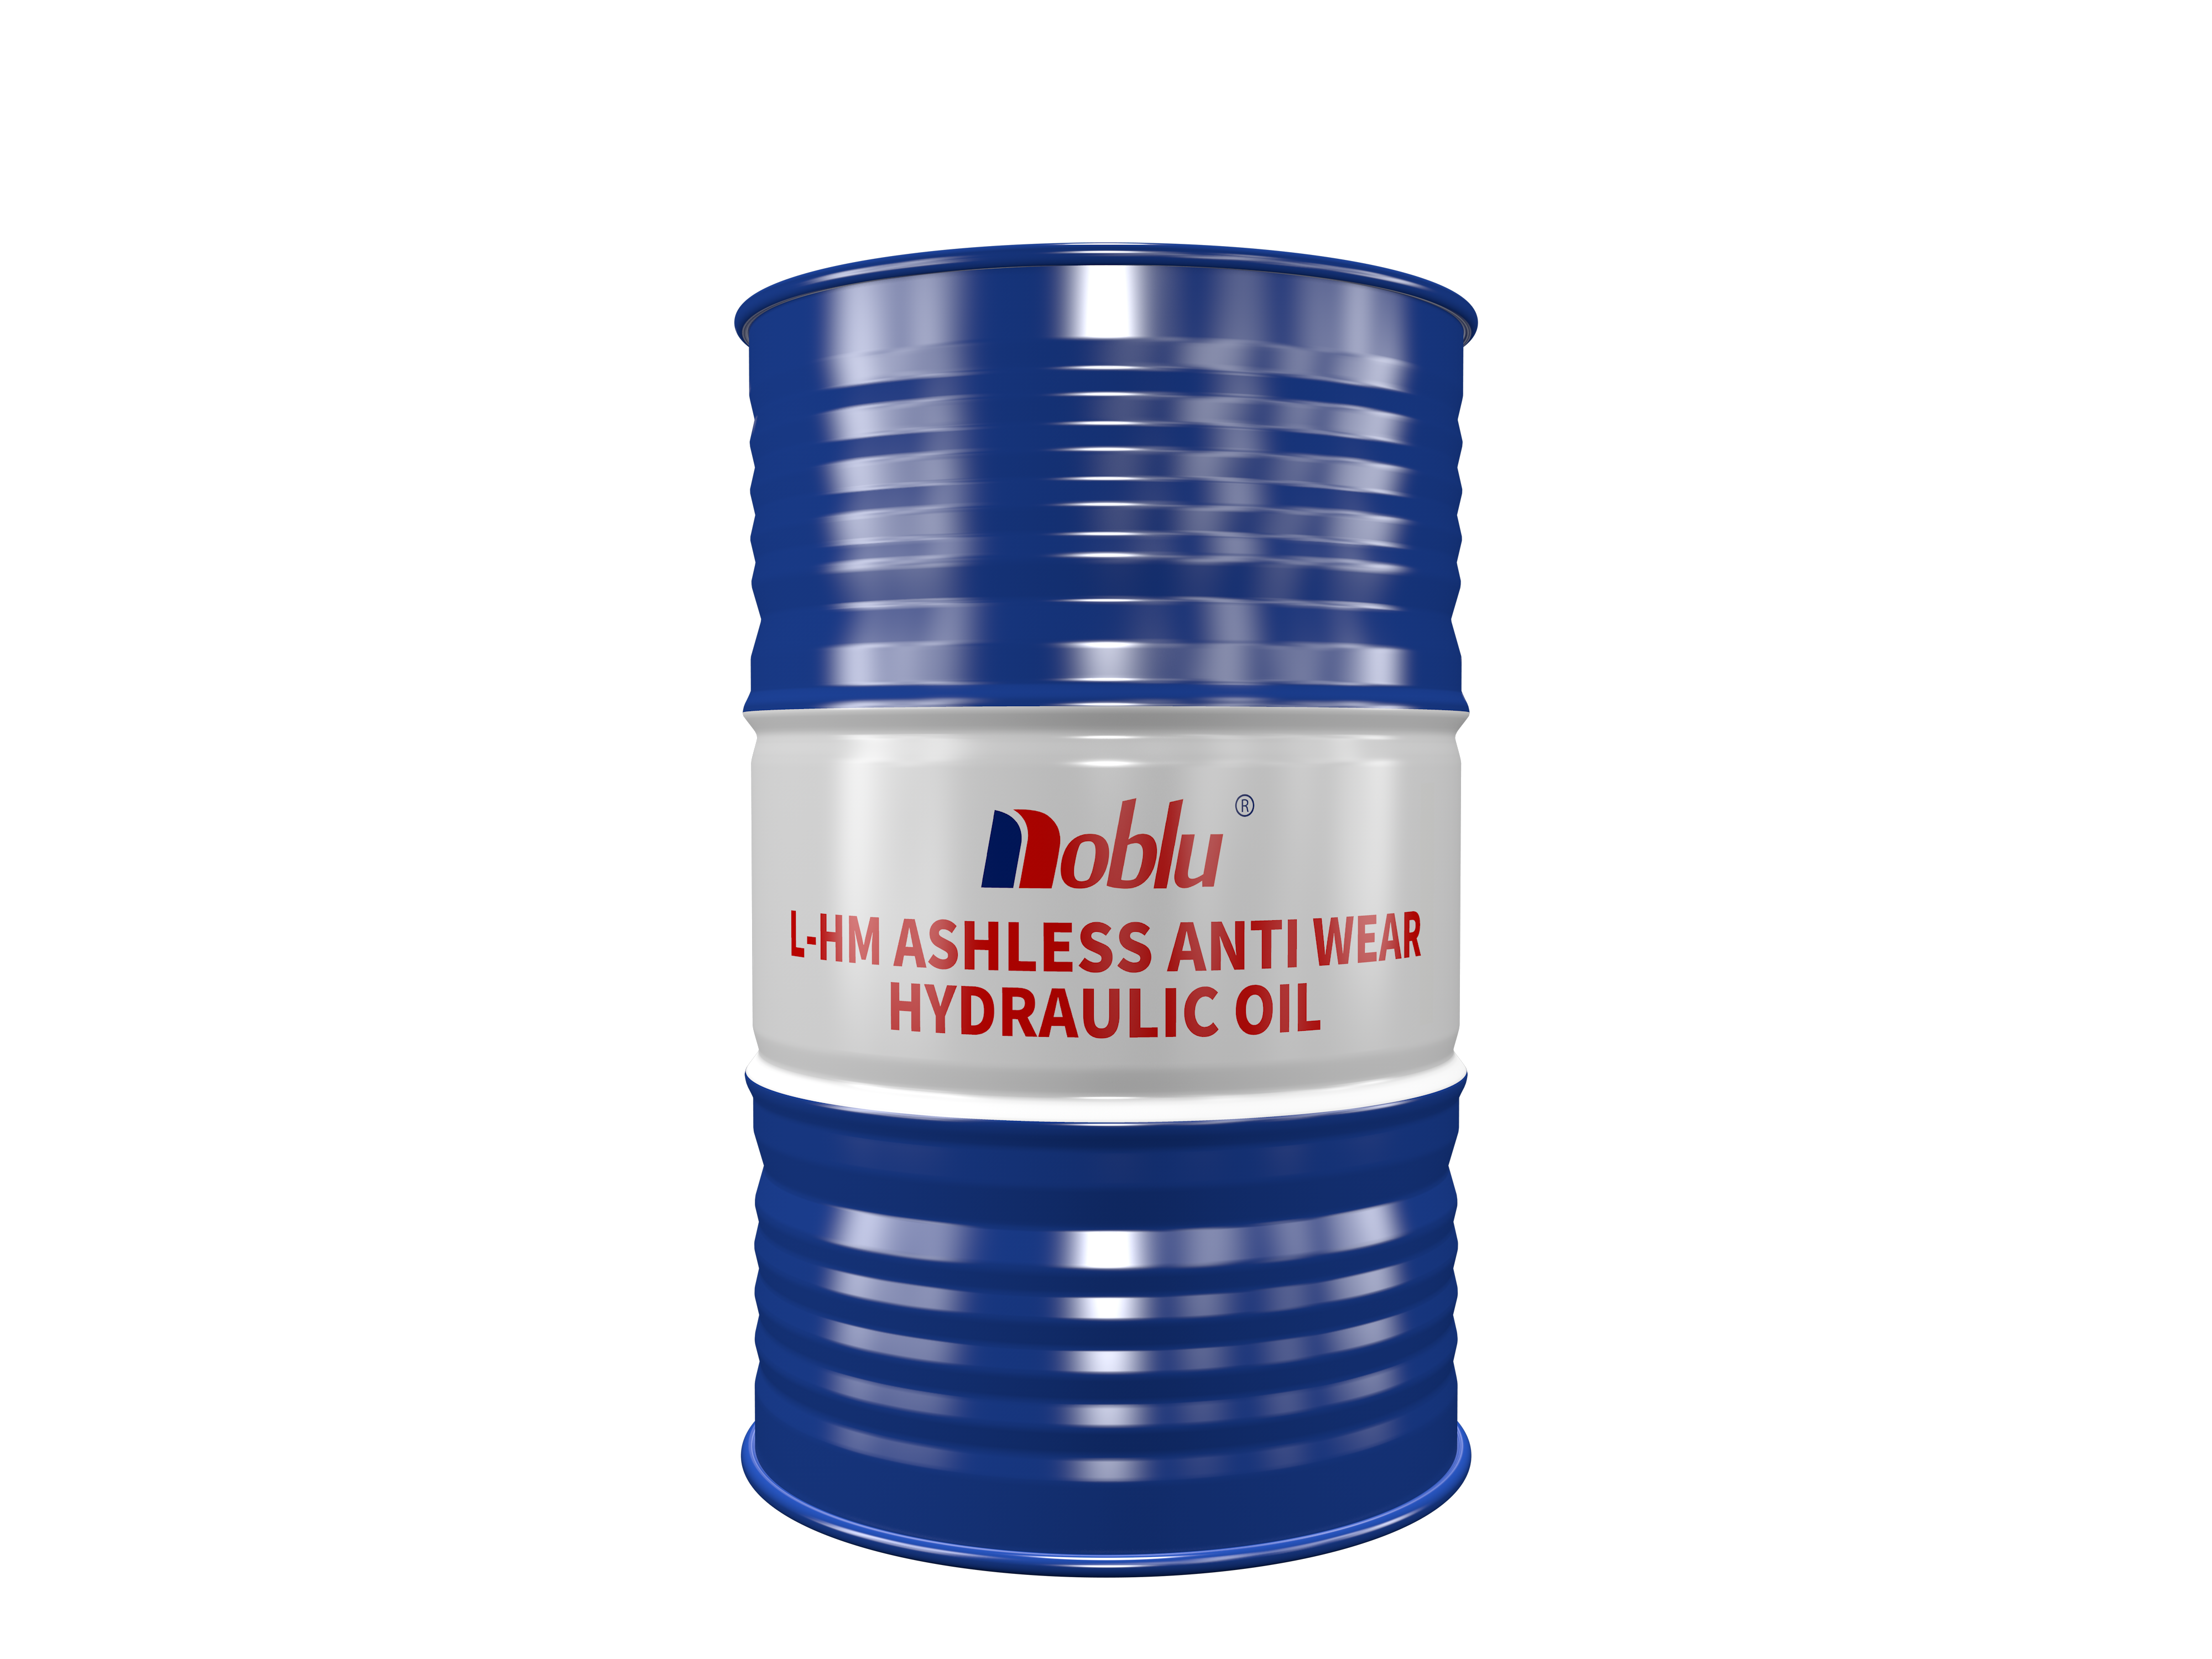 L-HM ashless anti wear hydraulic oil